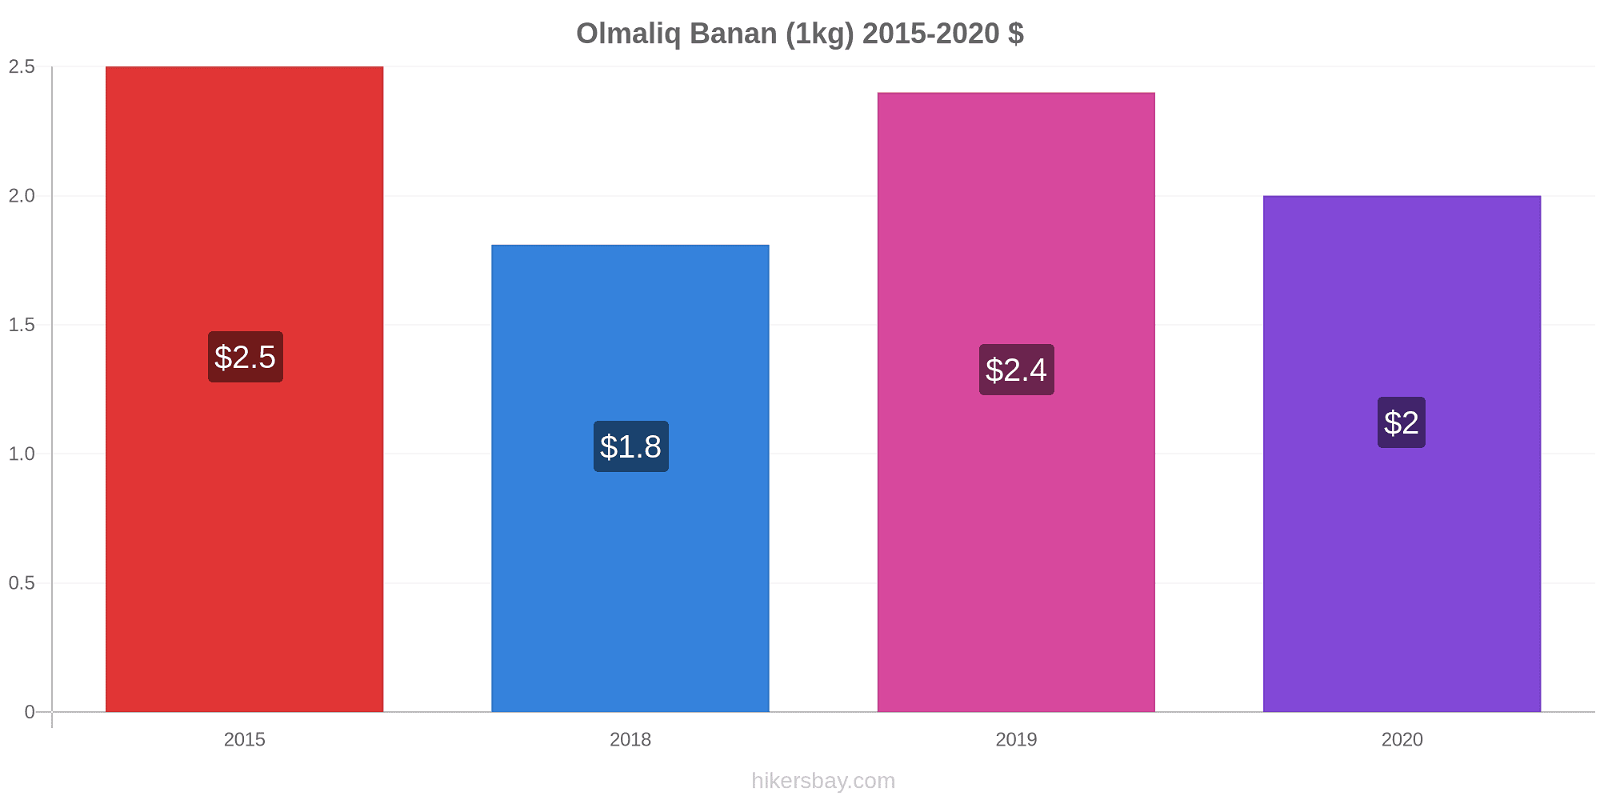 Olmaliq prisendringer Banan (1kg) hikersbay.com